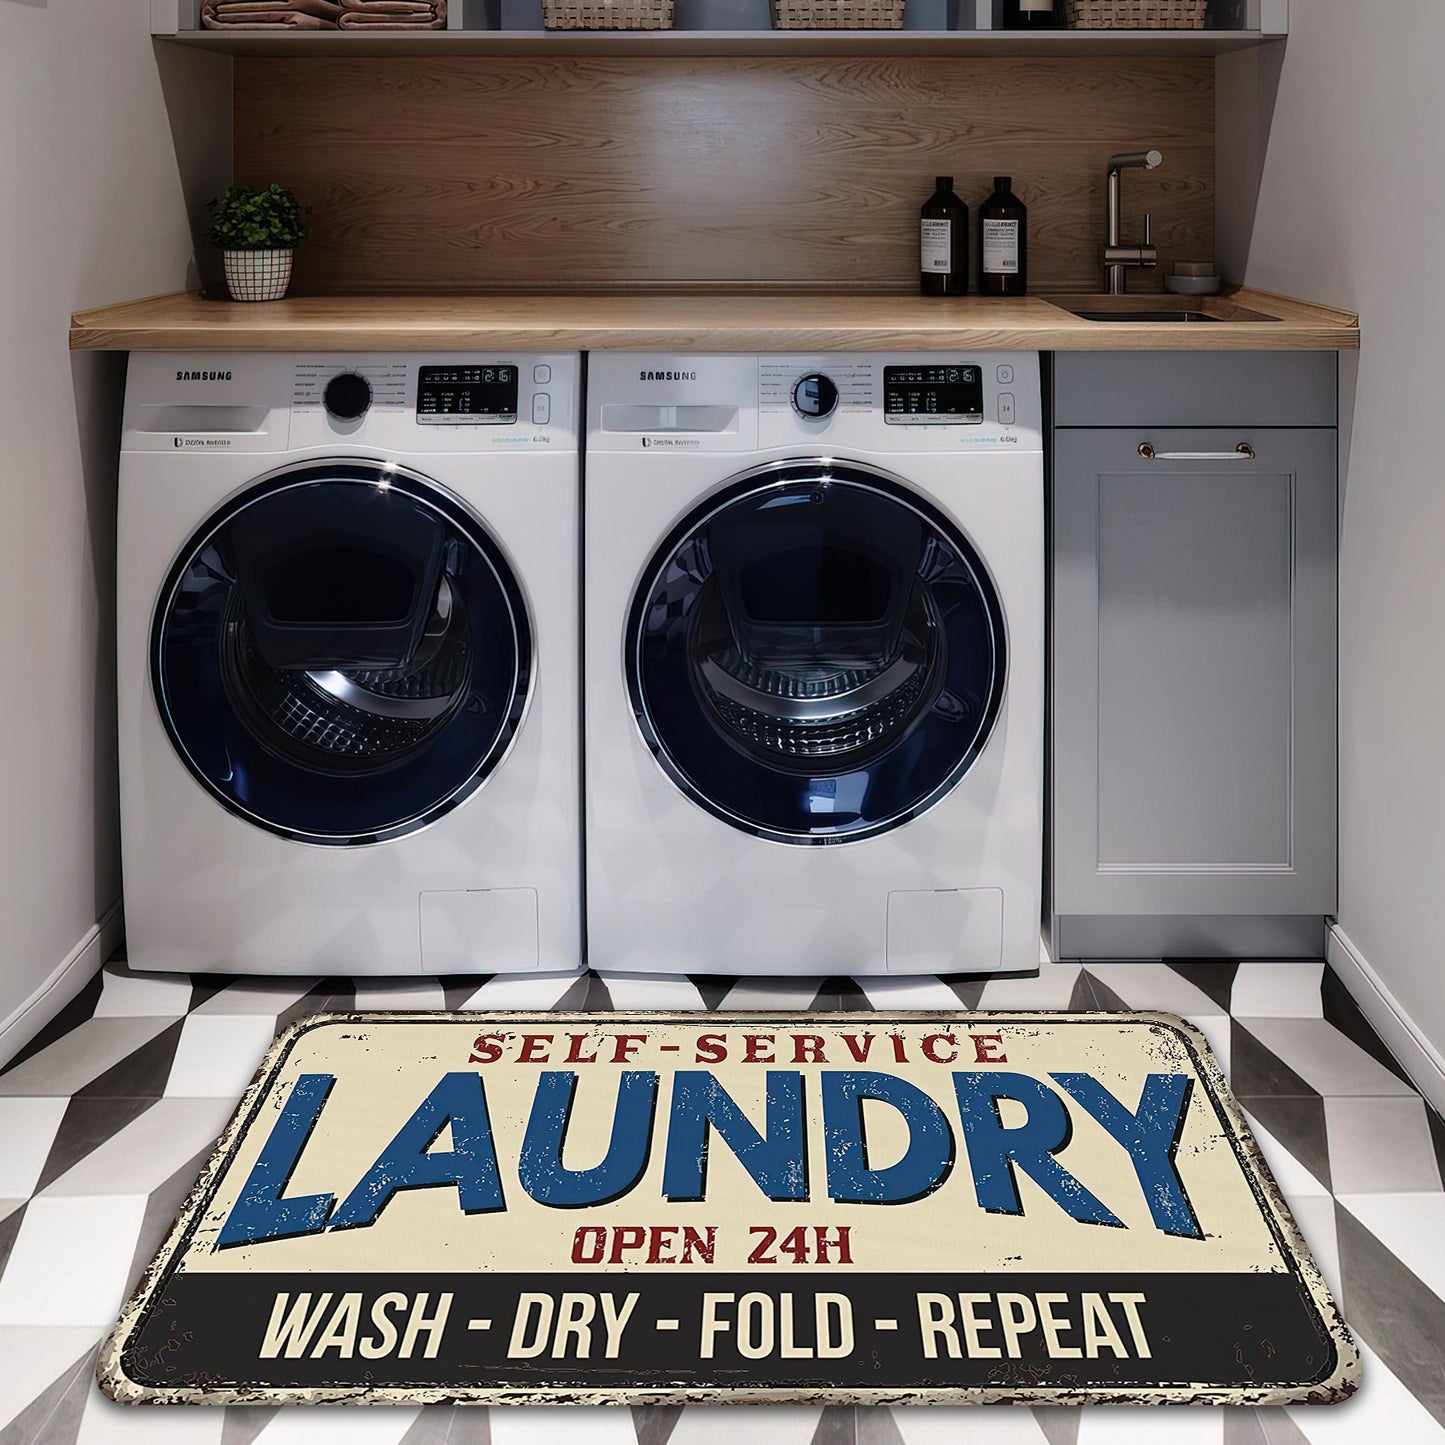 Retro Style Laundry Rug, Nonslip Area Mat for Laundry Room, Bath Mat, Vintage Bathroom Decor